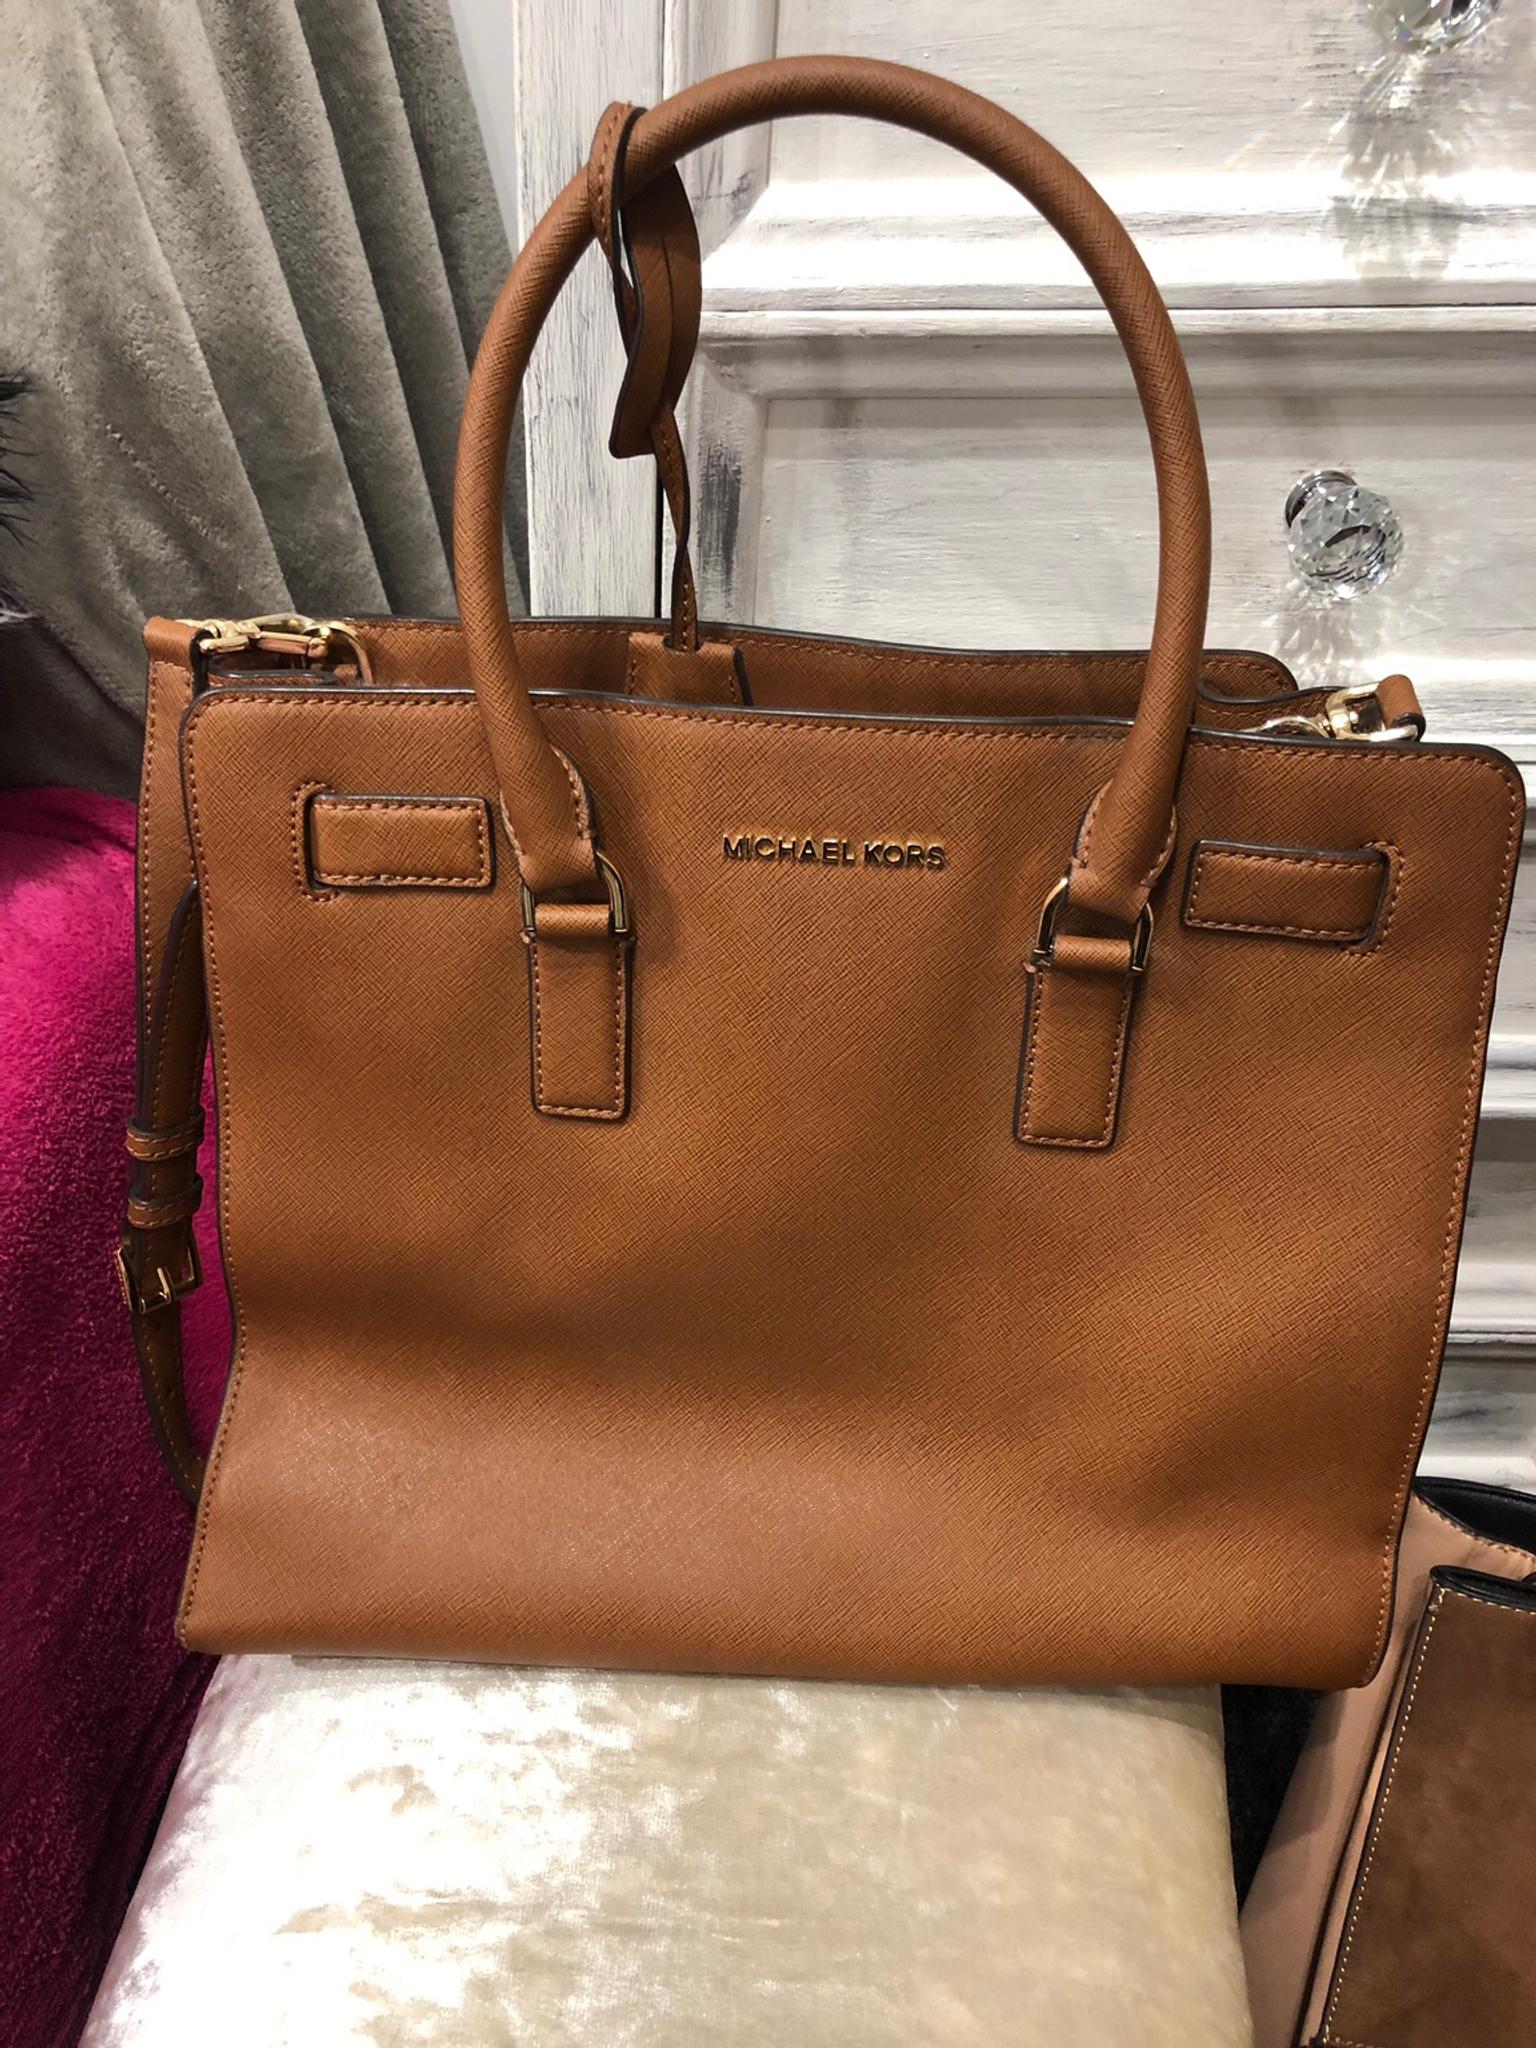 Michael Kors genuine leather bag in 